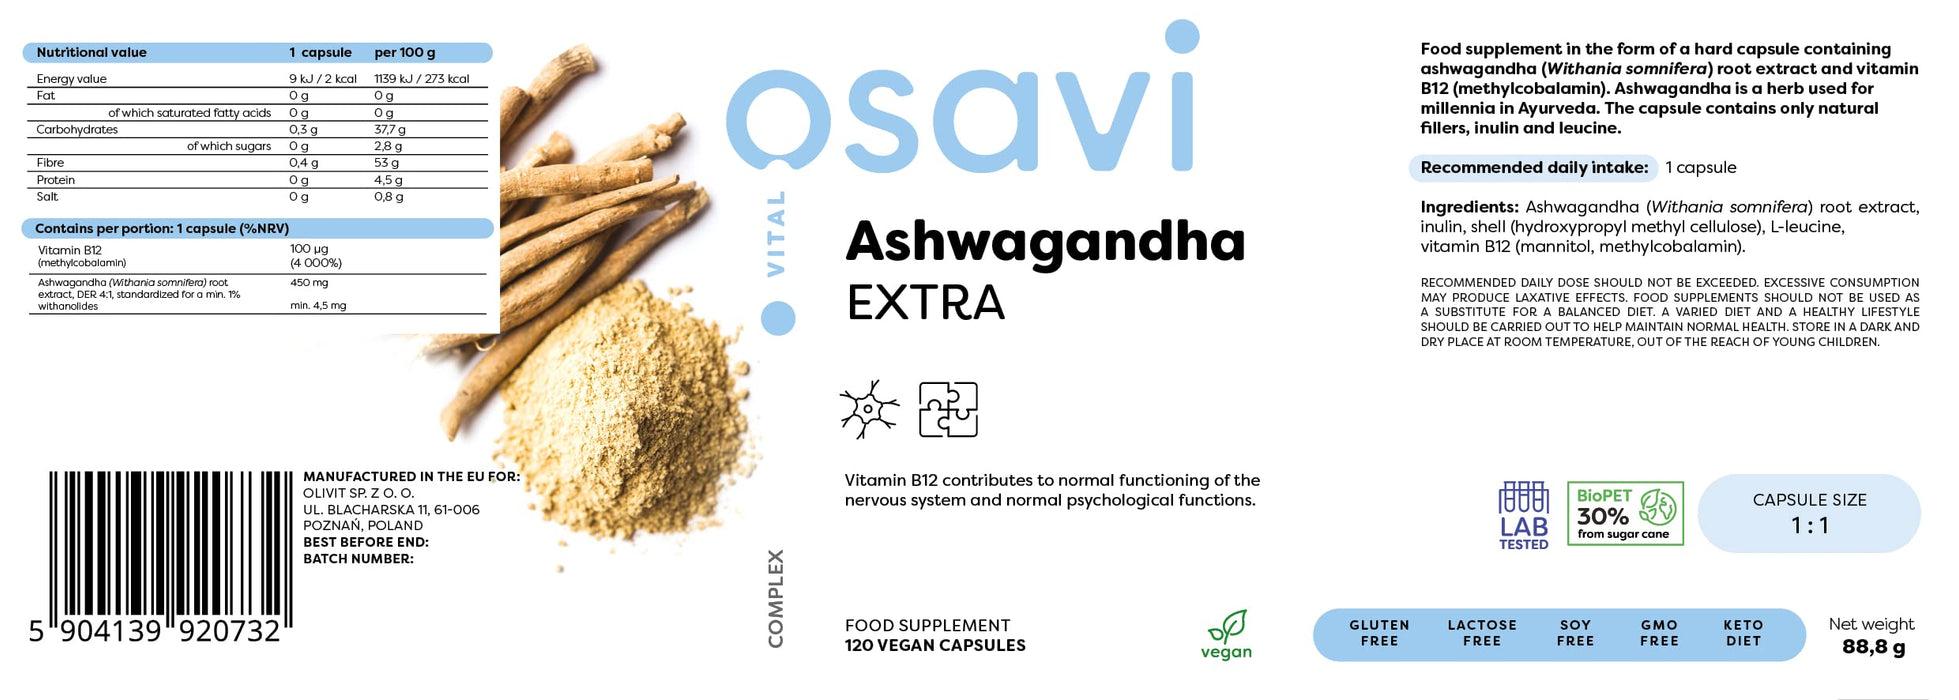 Osavi Ashwagandha Extra, 450mg - 120 vegan caps | High-Quality Combination Multivitamins & Minerals | MySupplementShop.co.uk